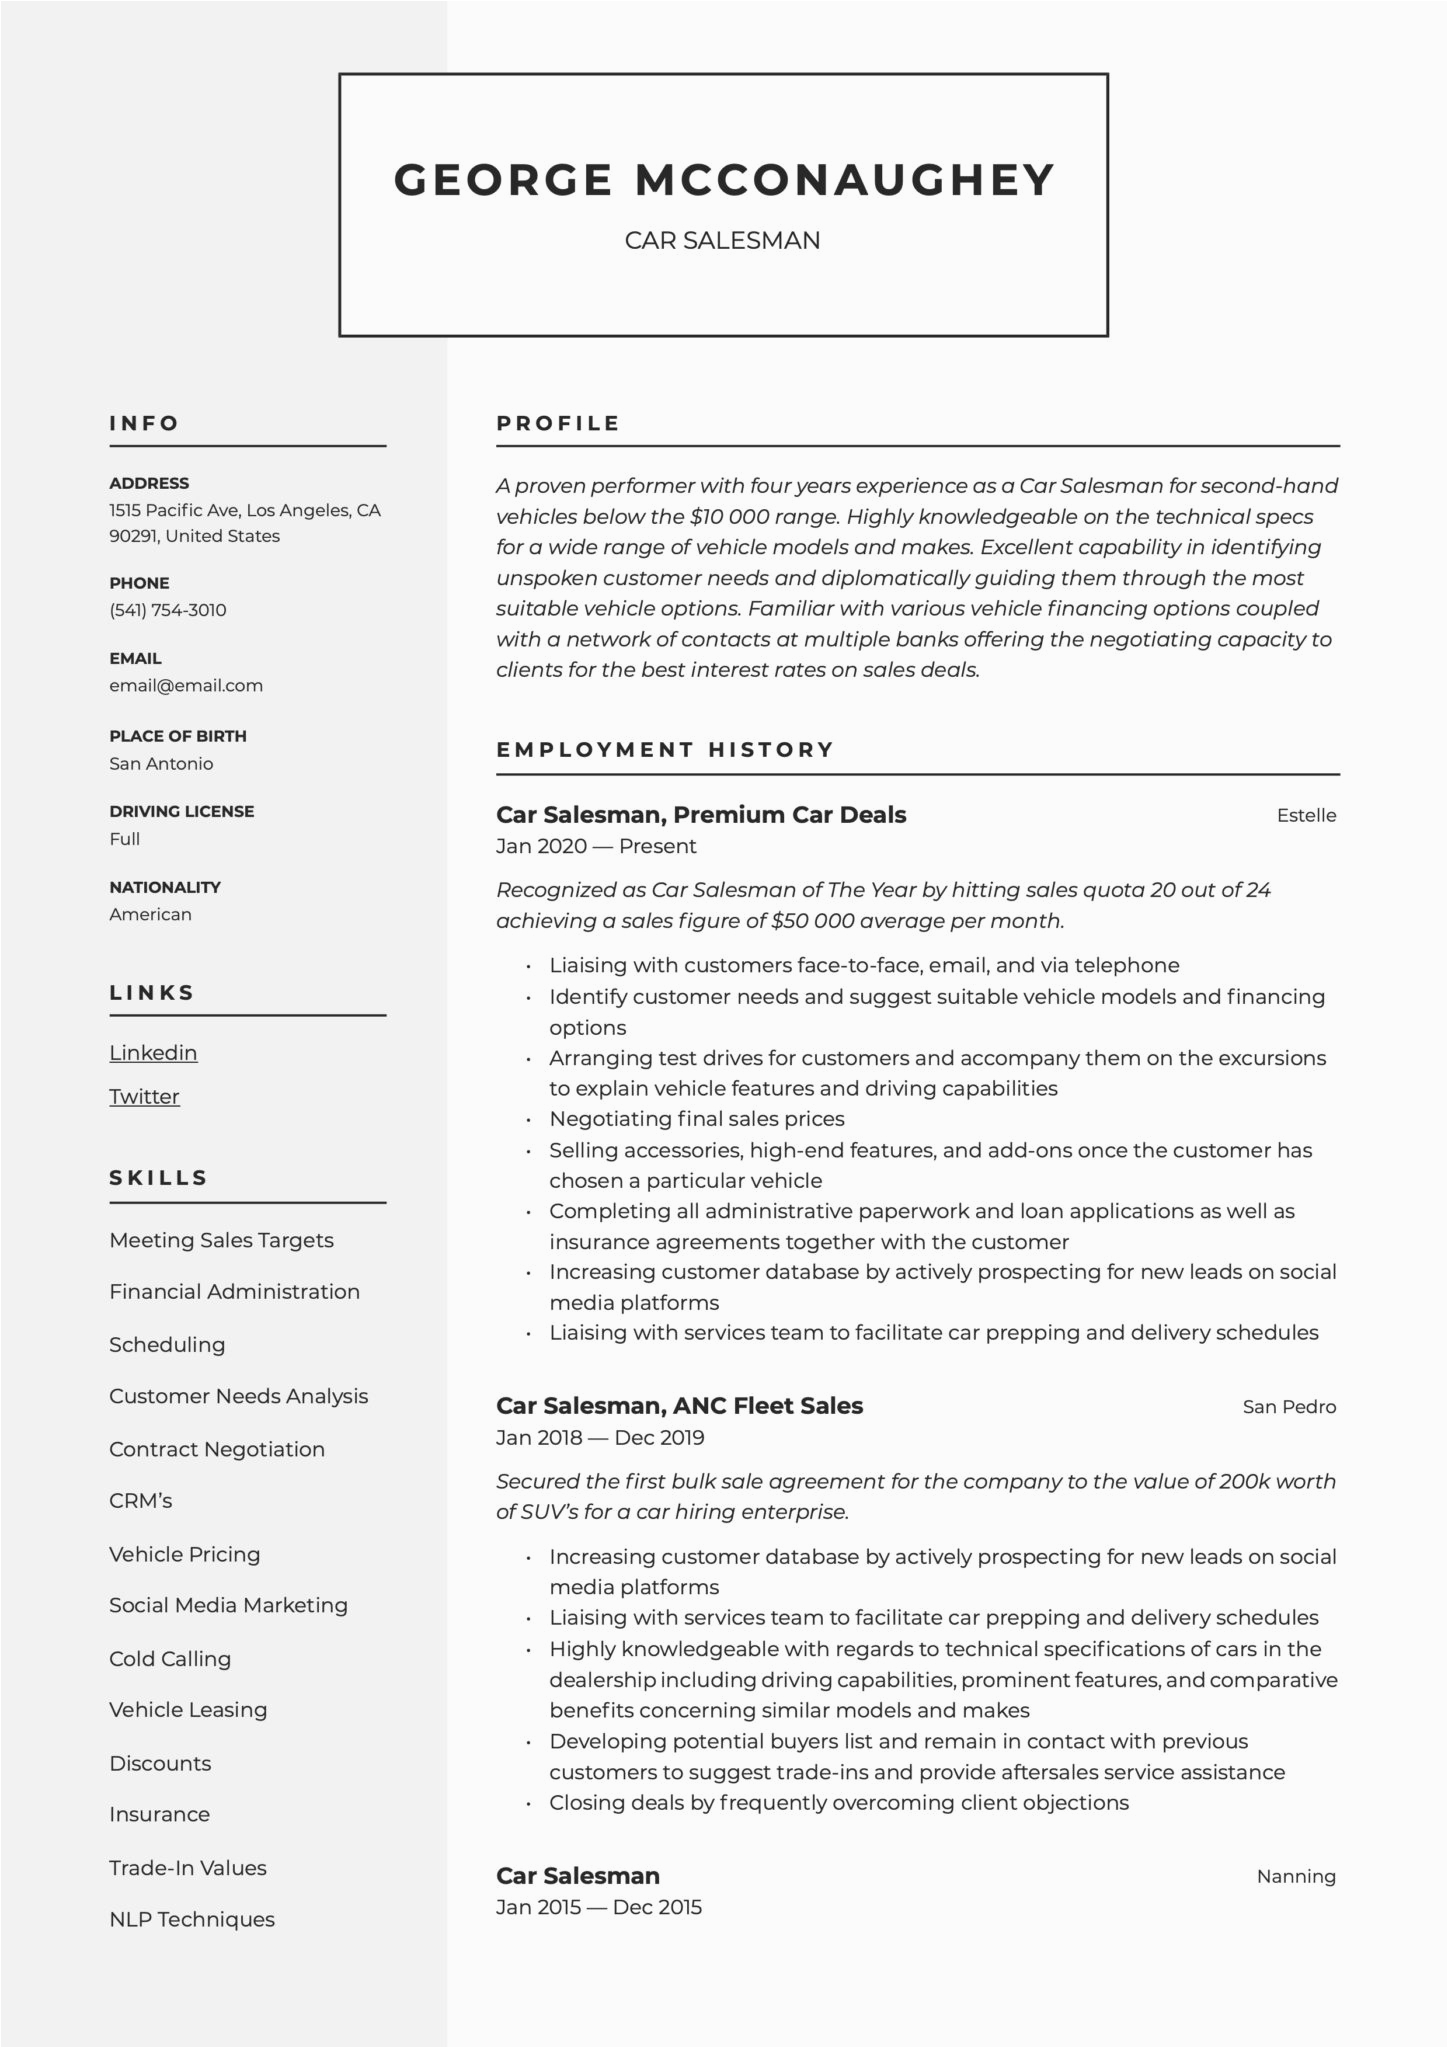 Car Salesman Job Description Resume Sample Car Salesman Resume & Writing Guide